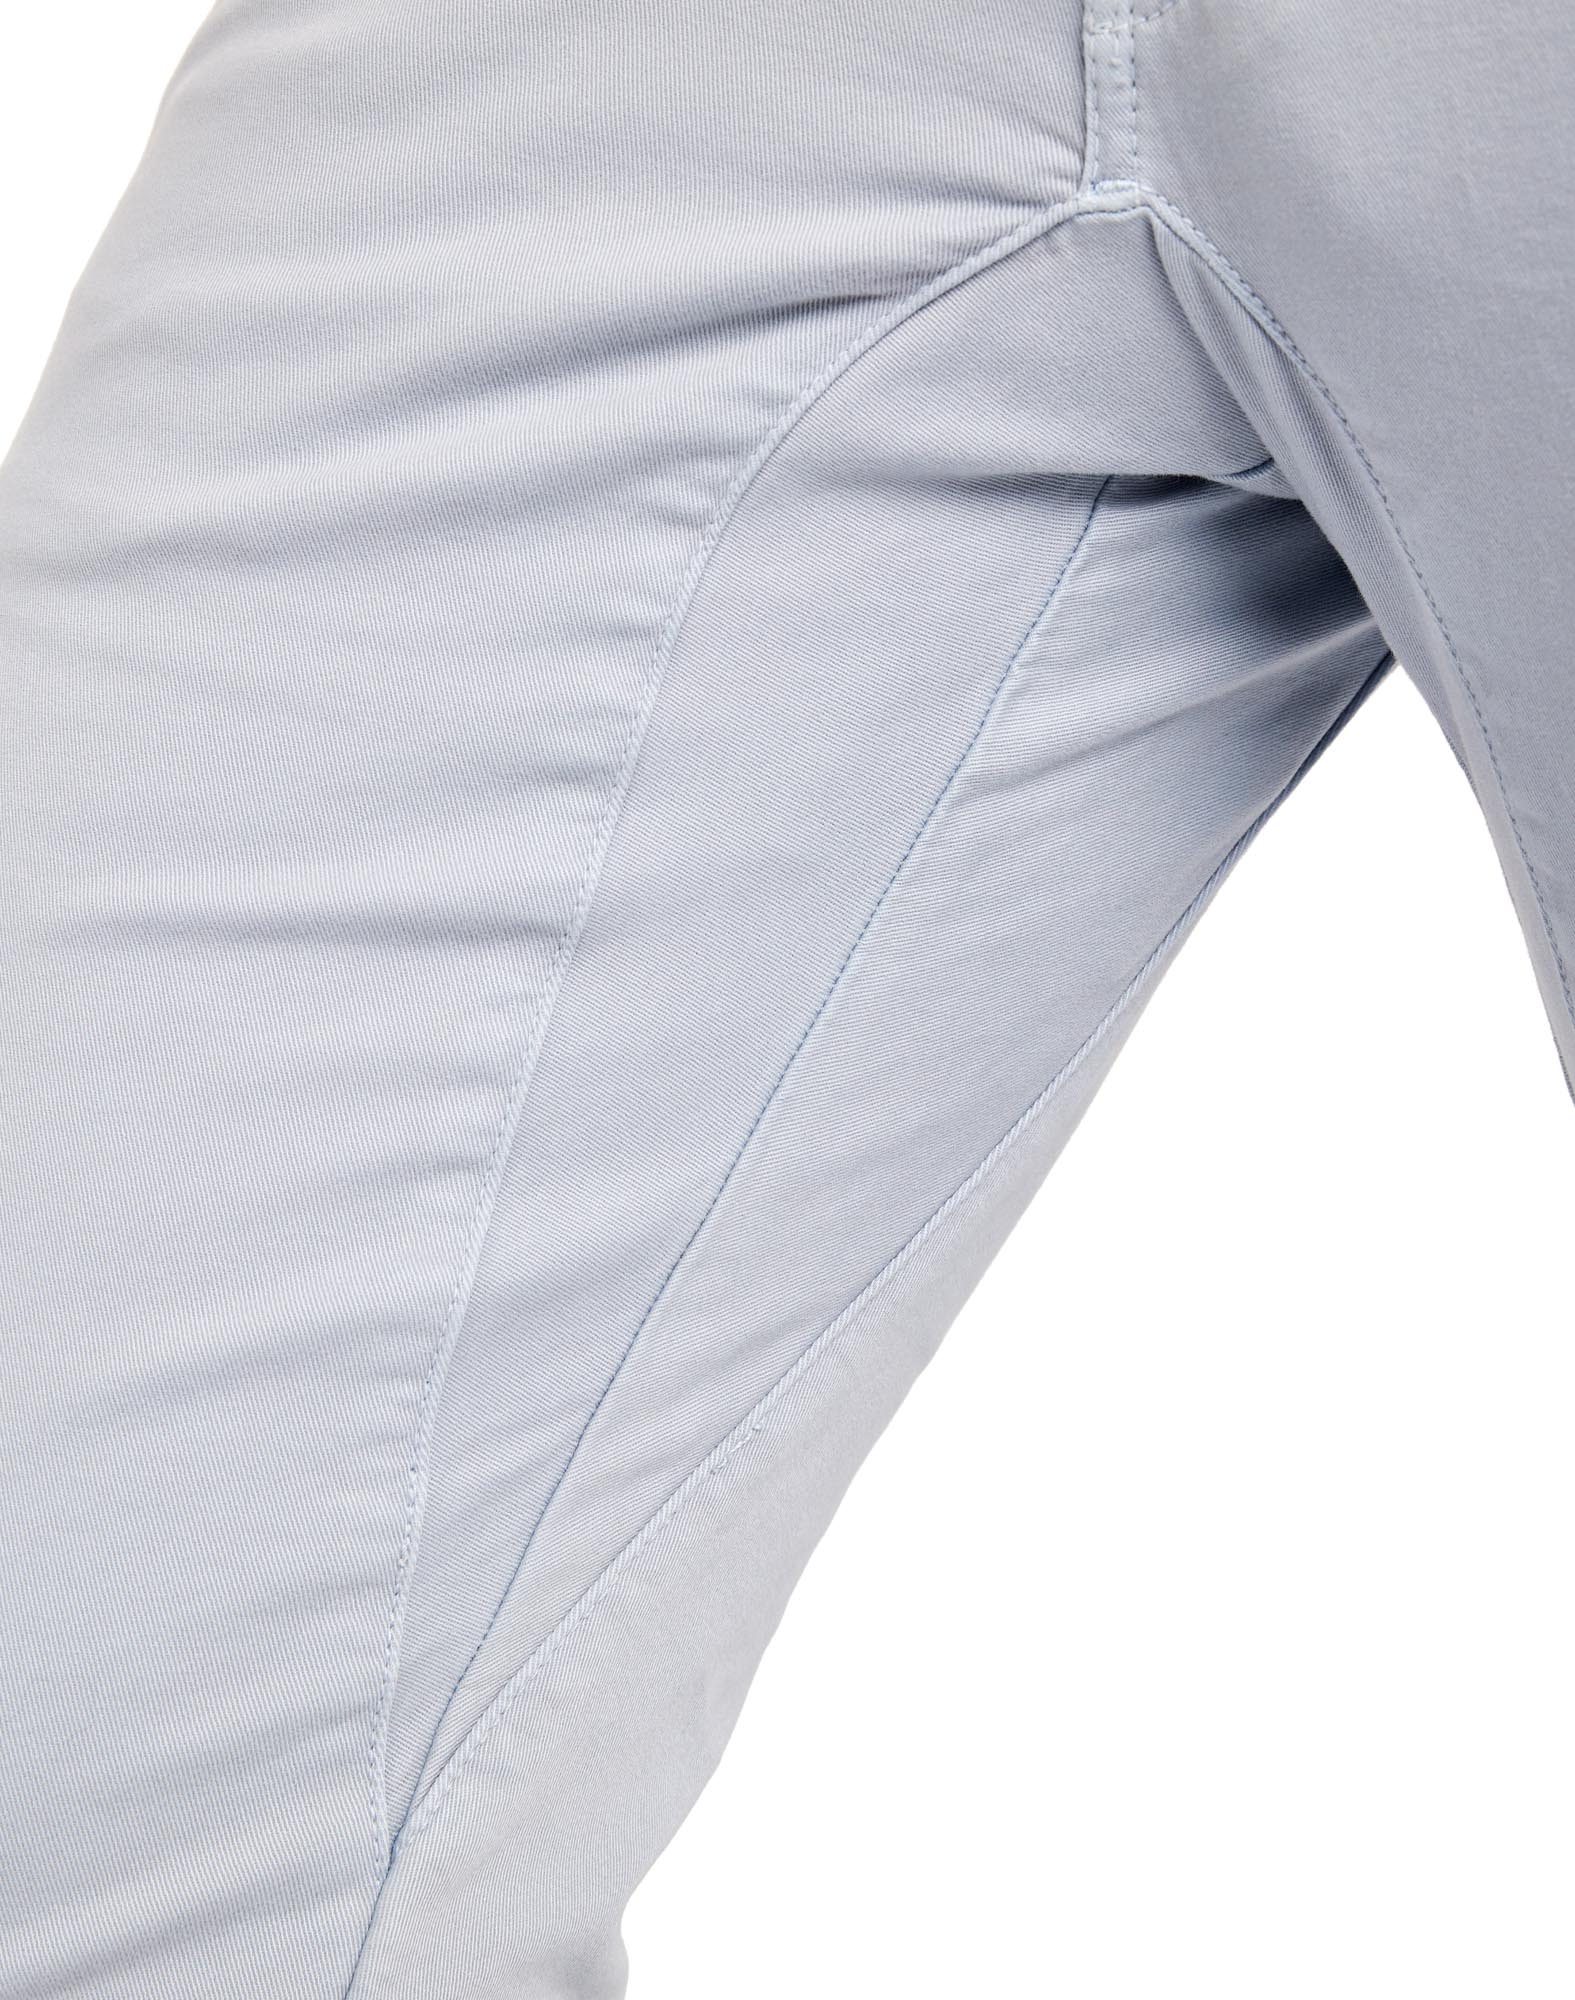 Men's pants chino cut ARCTIC